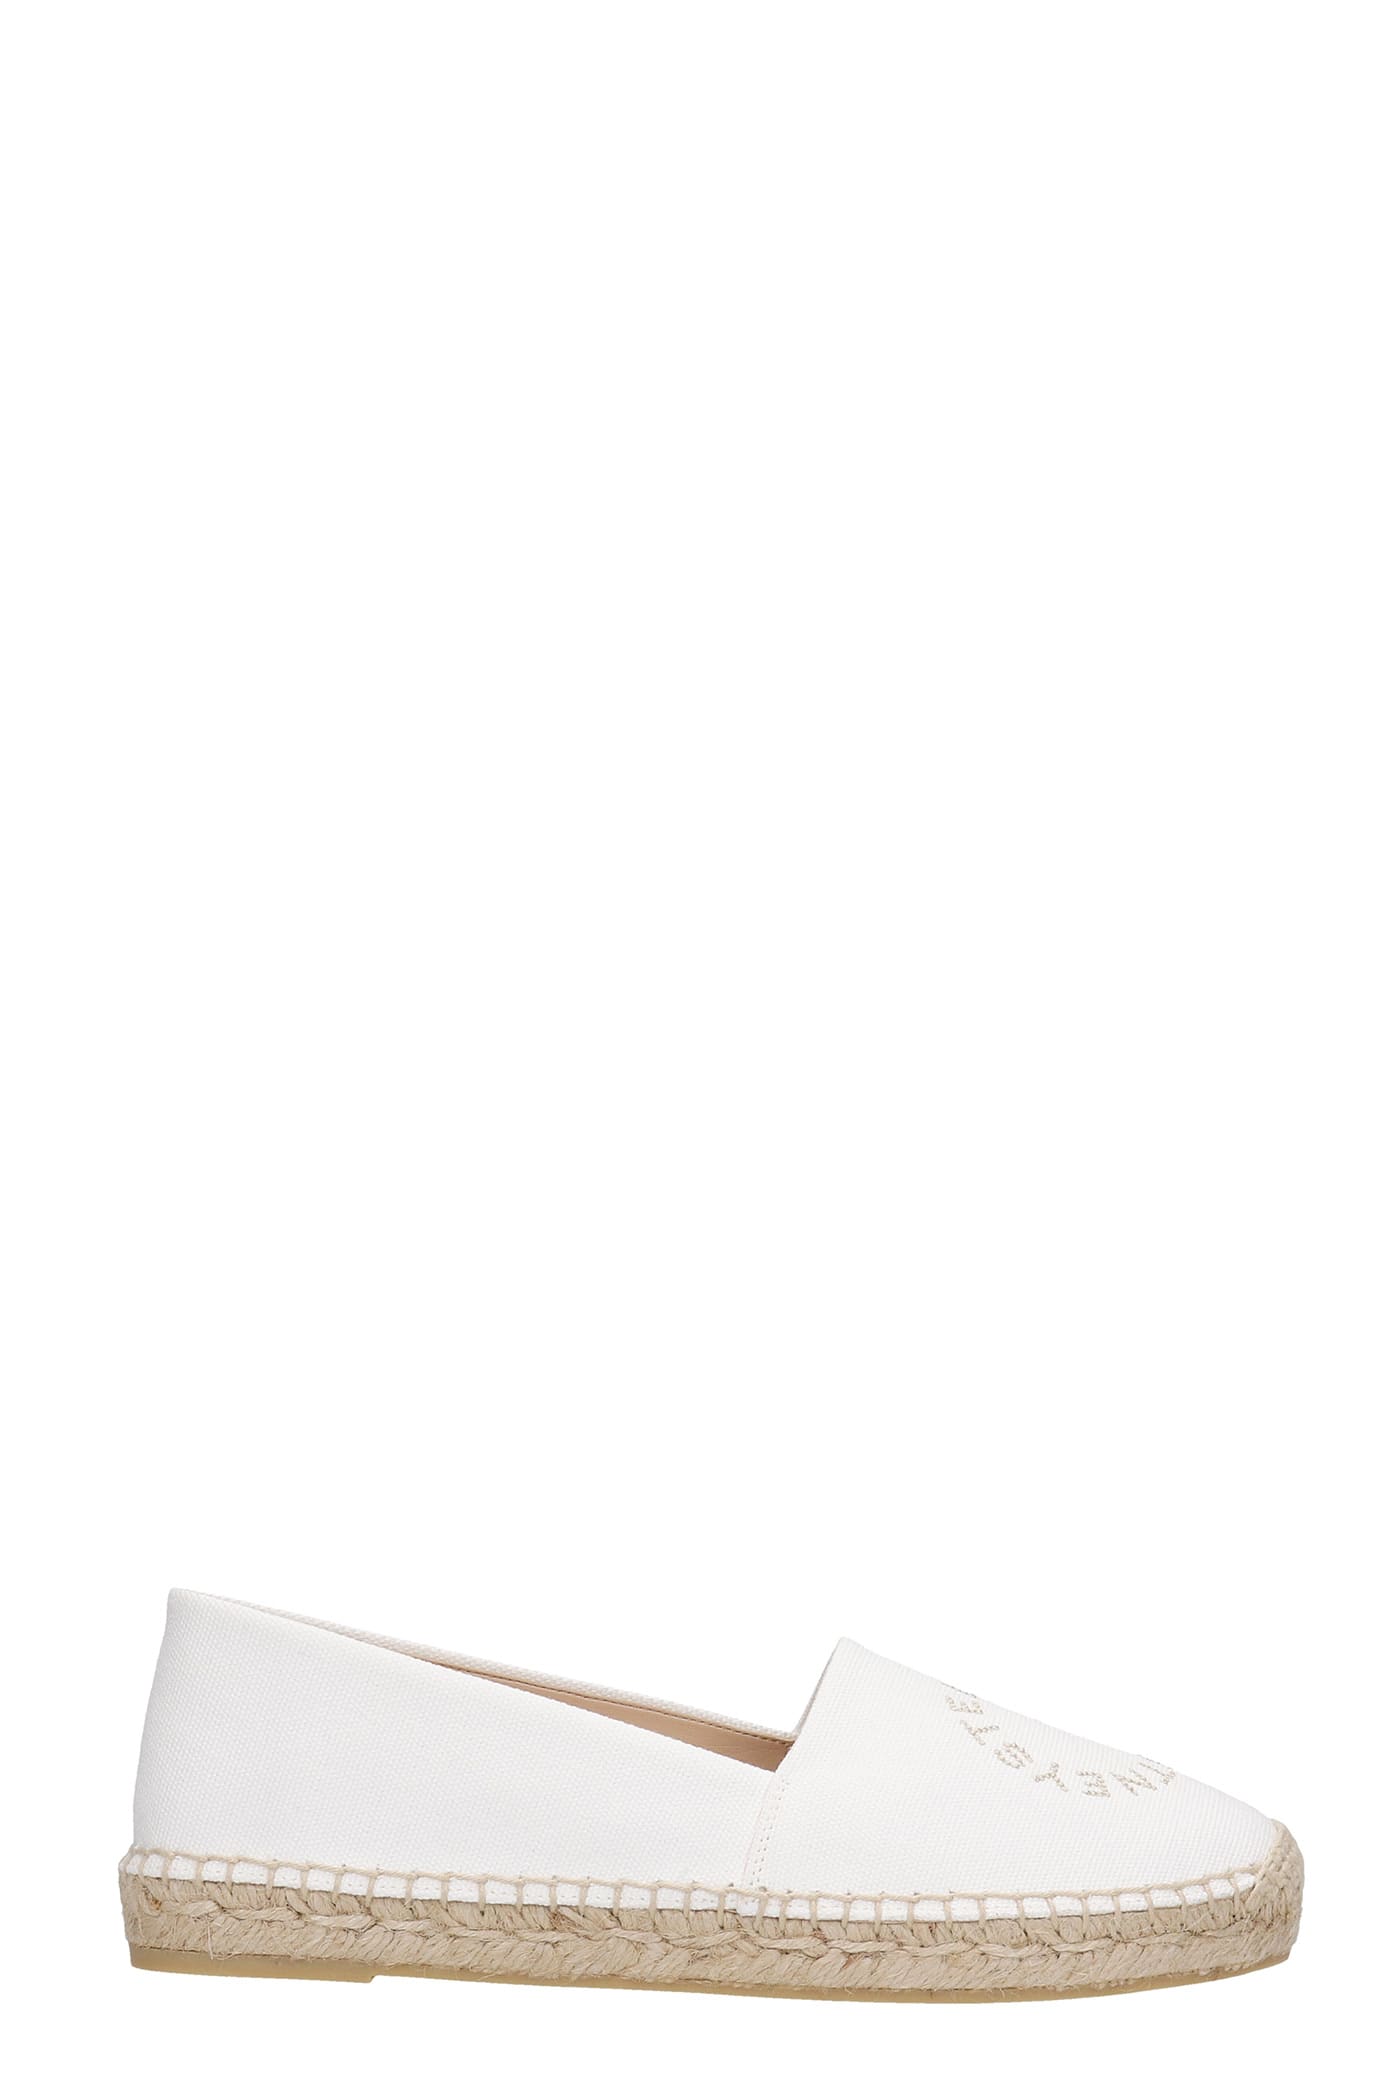 Stella McCartney Selene Espadrilles In White Canvas